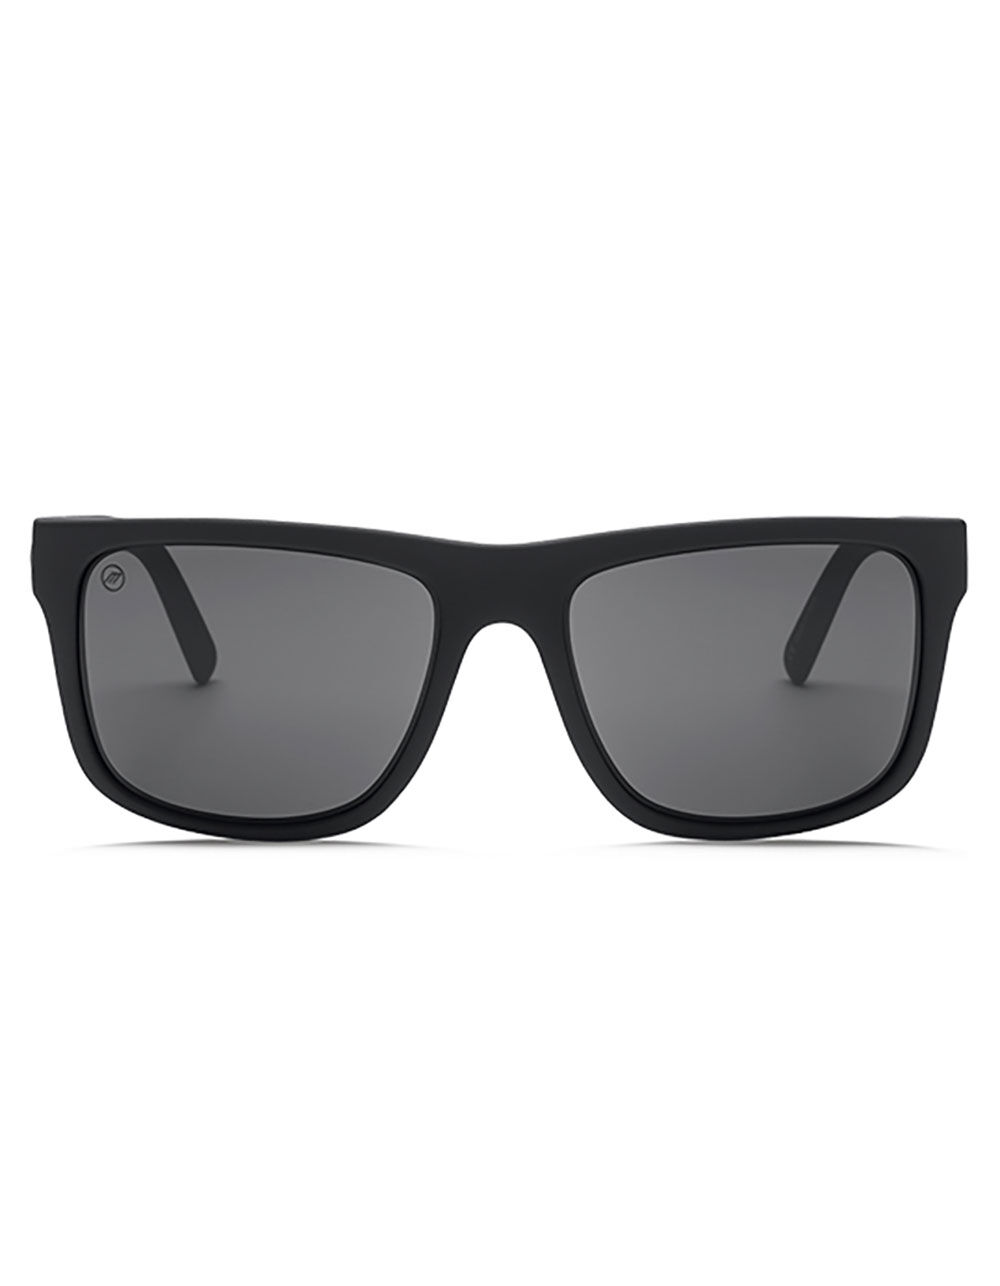 ELECTRIC Swingarm XL Sunglasses - MATBL | Tillys